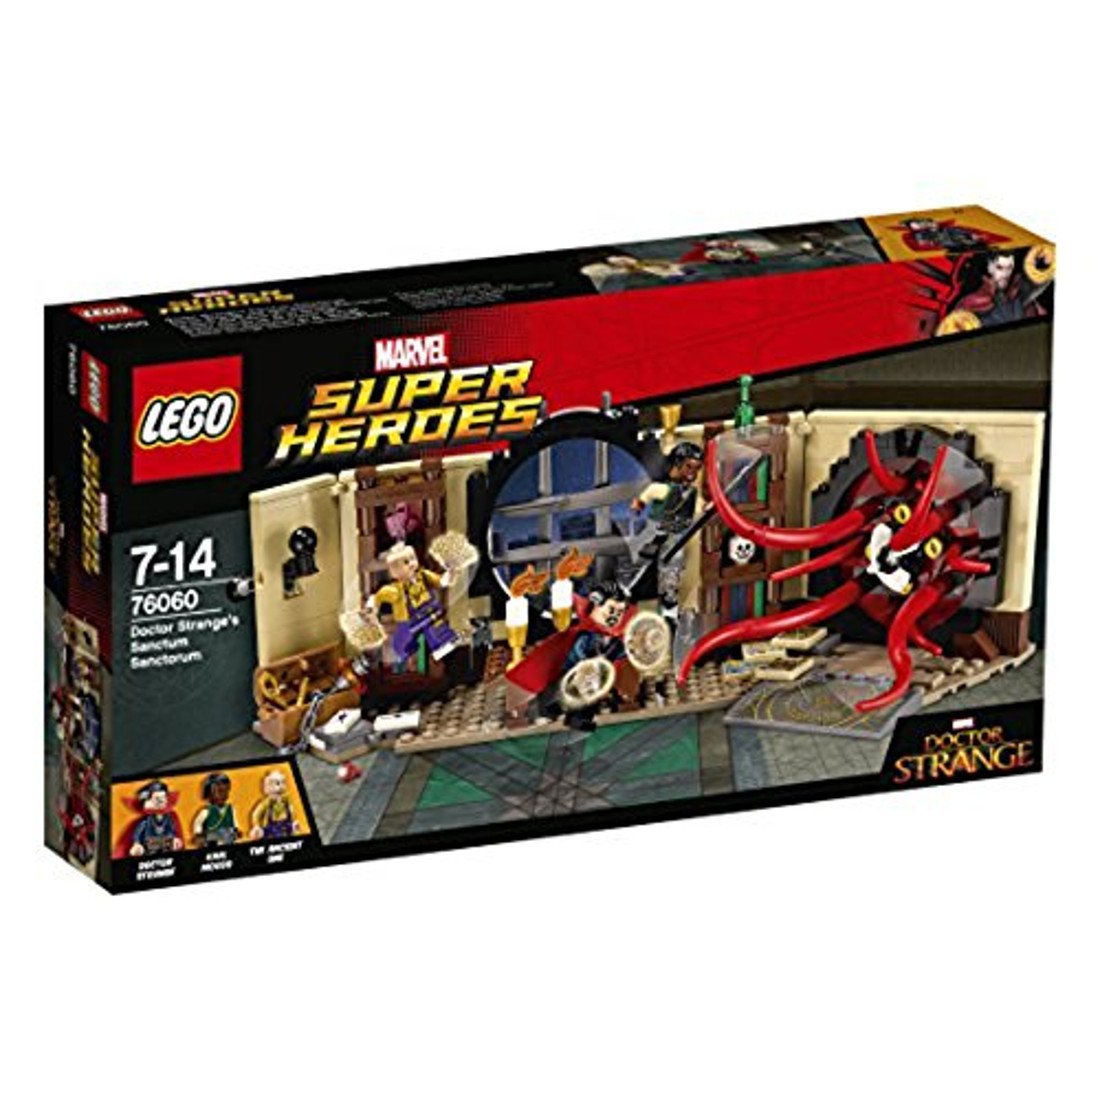 LEGO Marvel Super Heroes - 76060 Doctor Strange's Sanctum Sanctorum